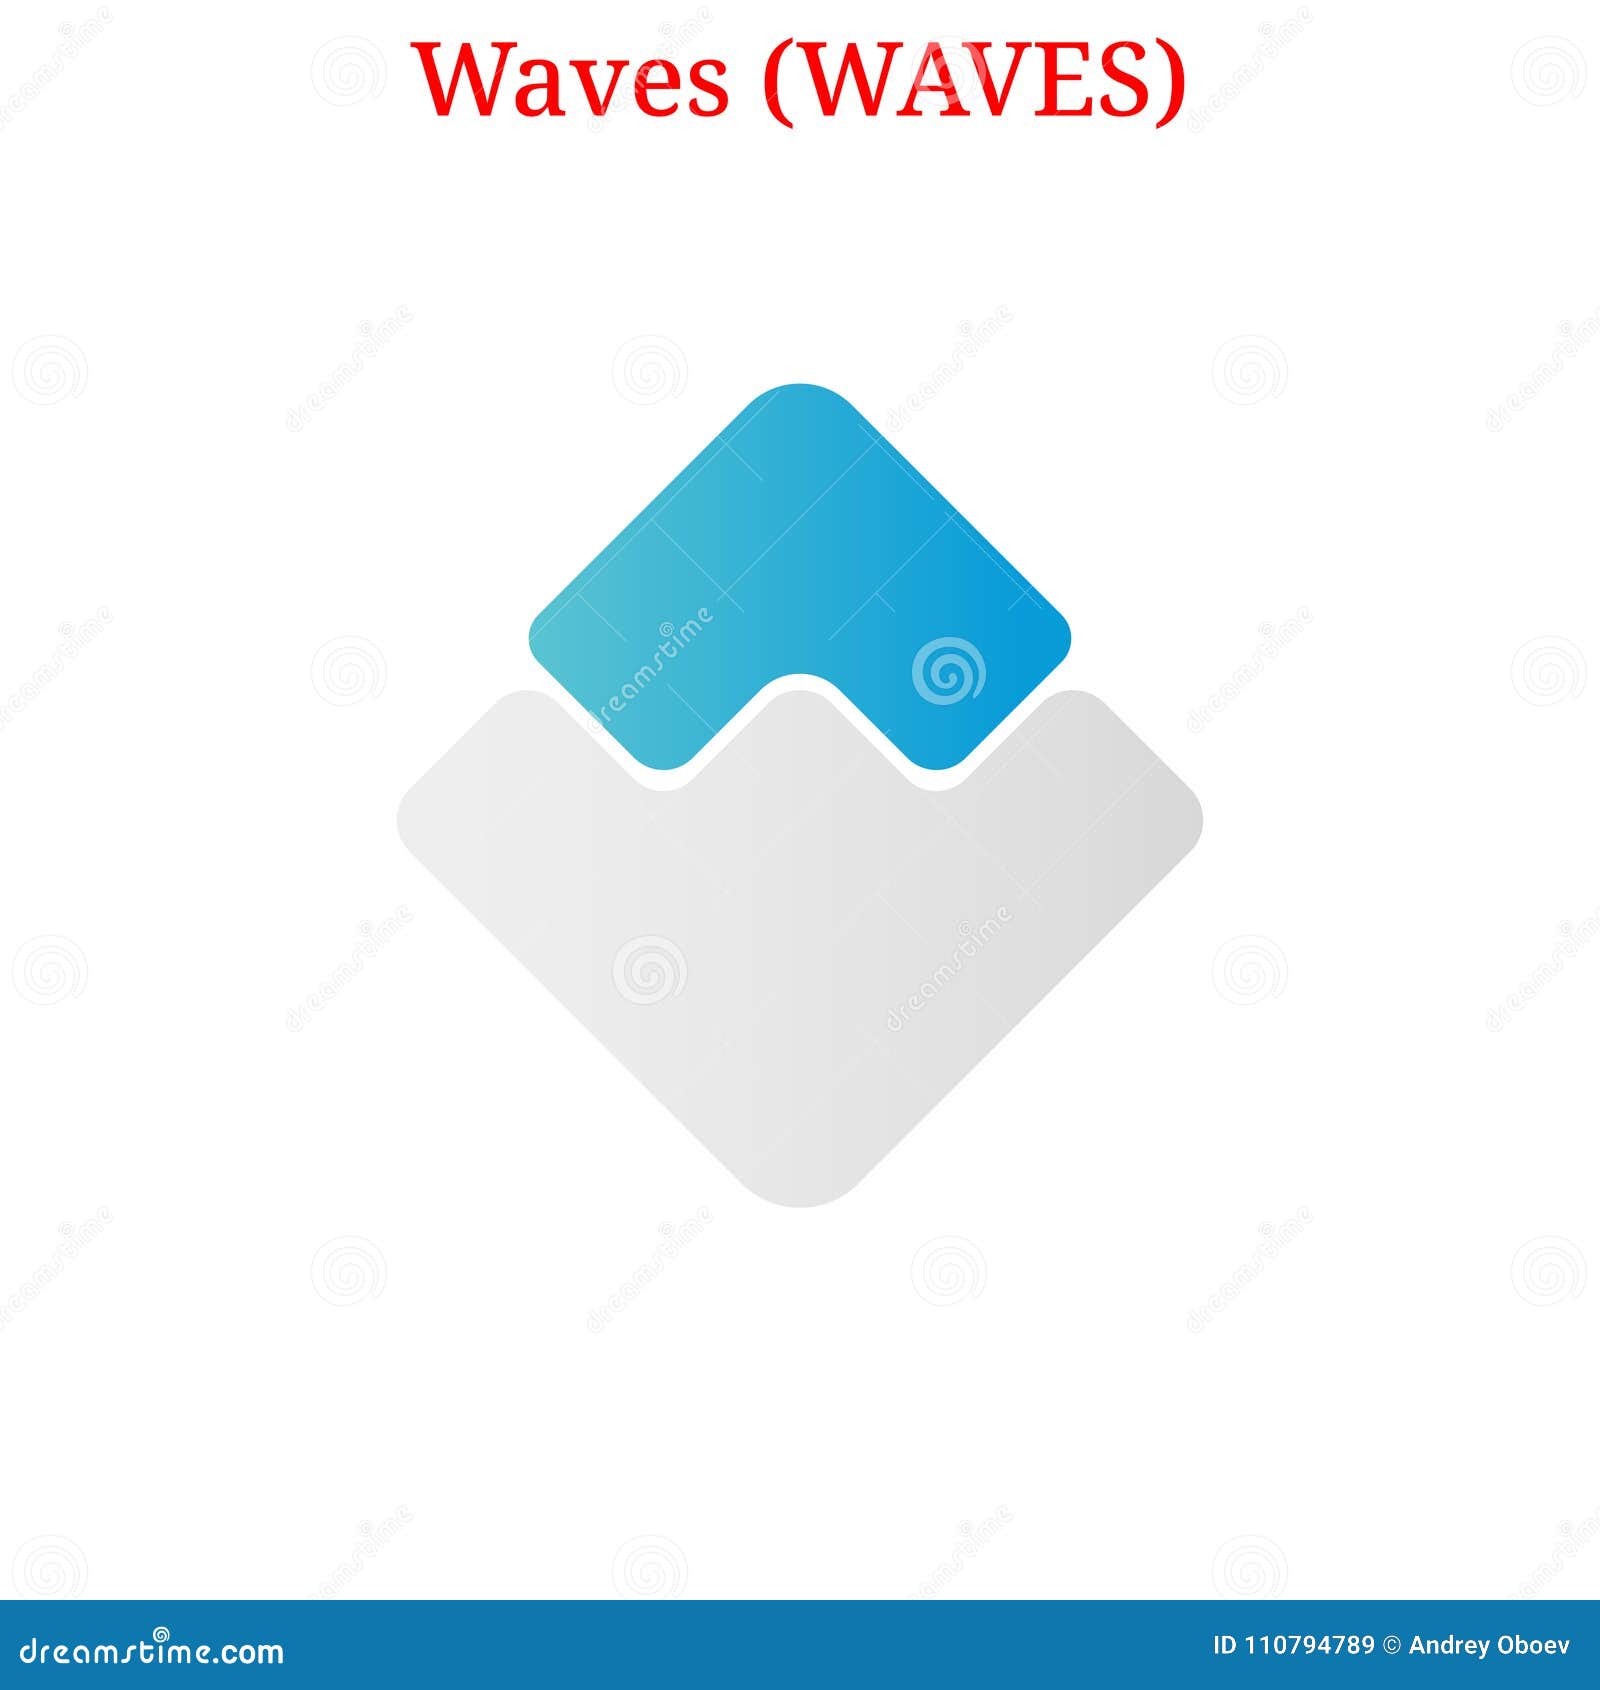 Vector Waves (WAVES) logo stock illustration. Illustration of stack